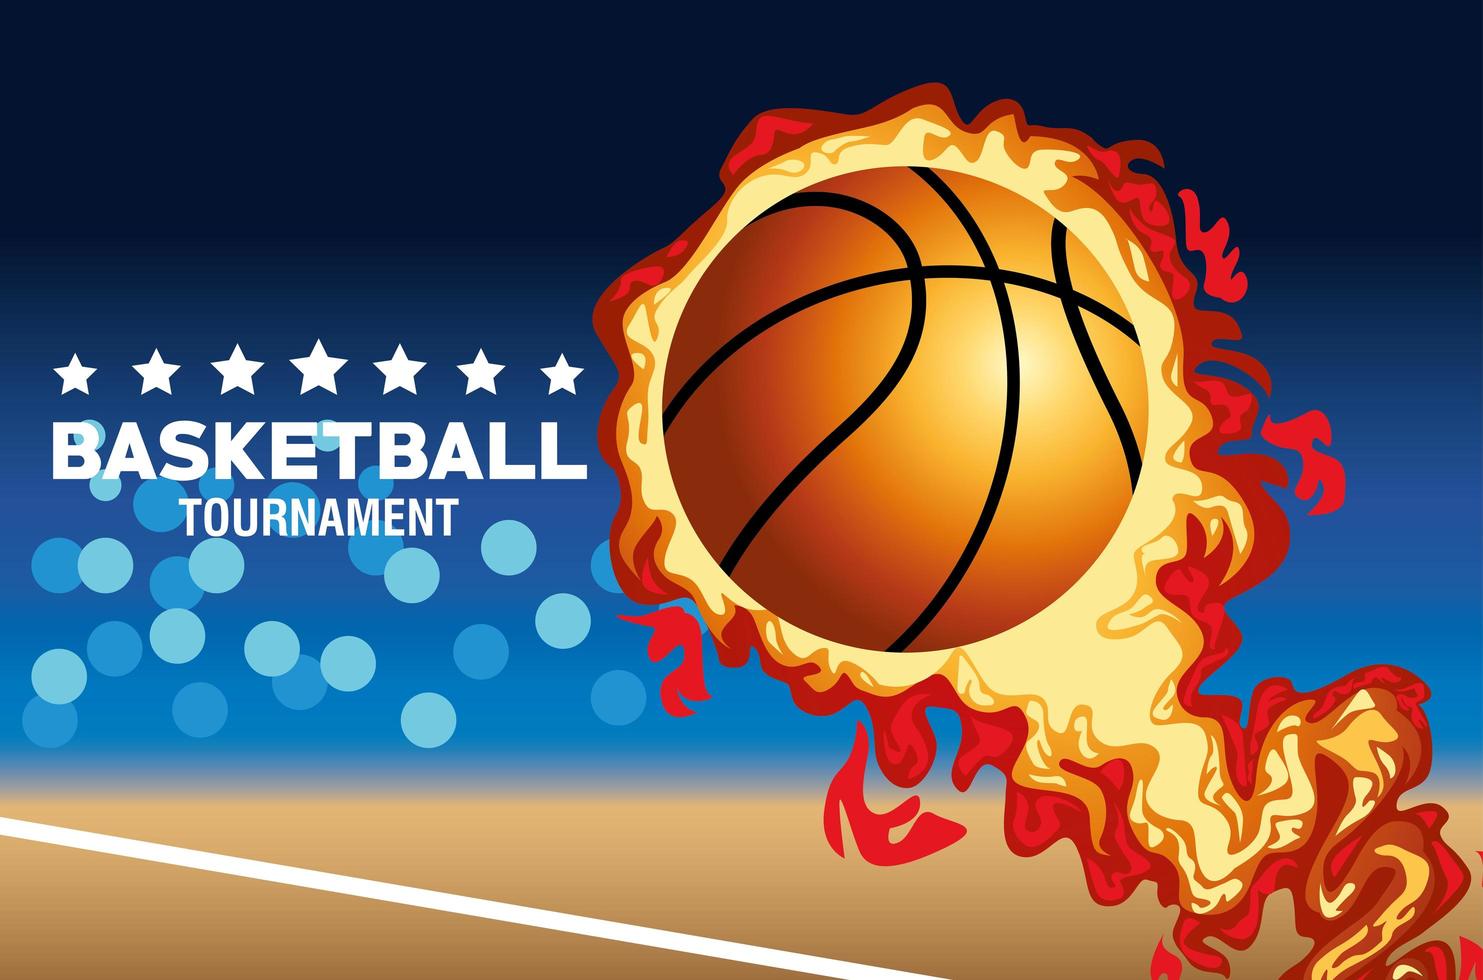 basketbaltoernooi banner met bal in brand vector